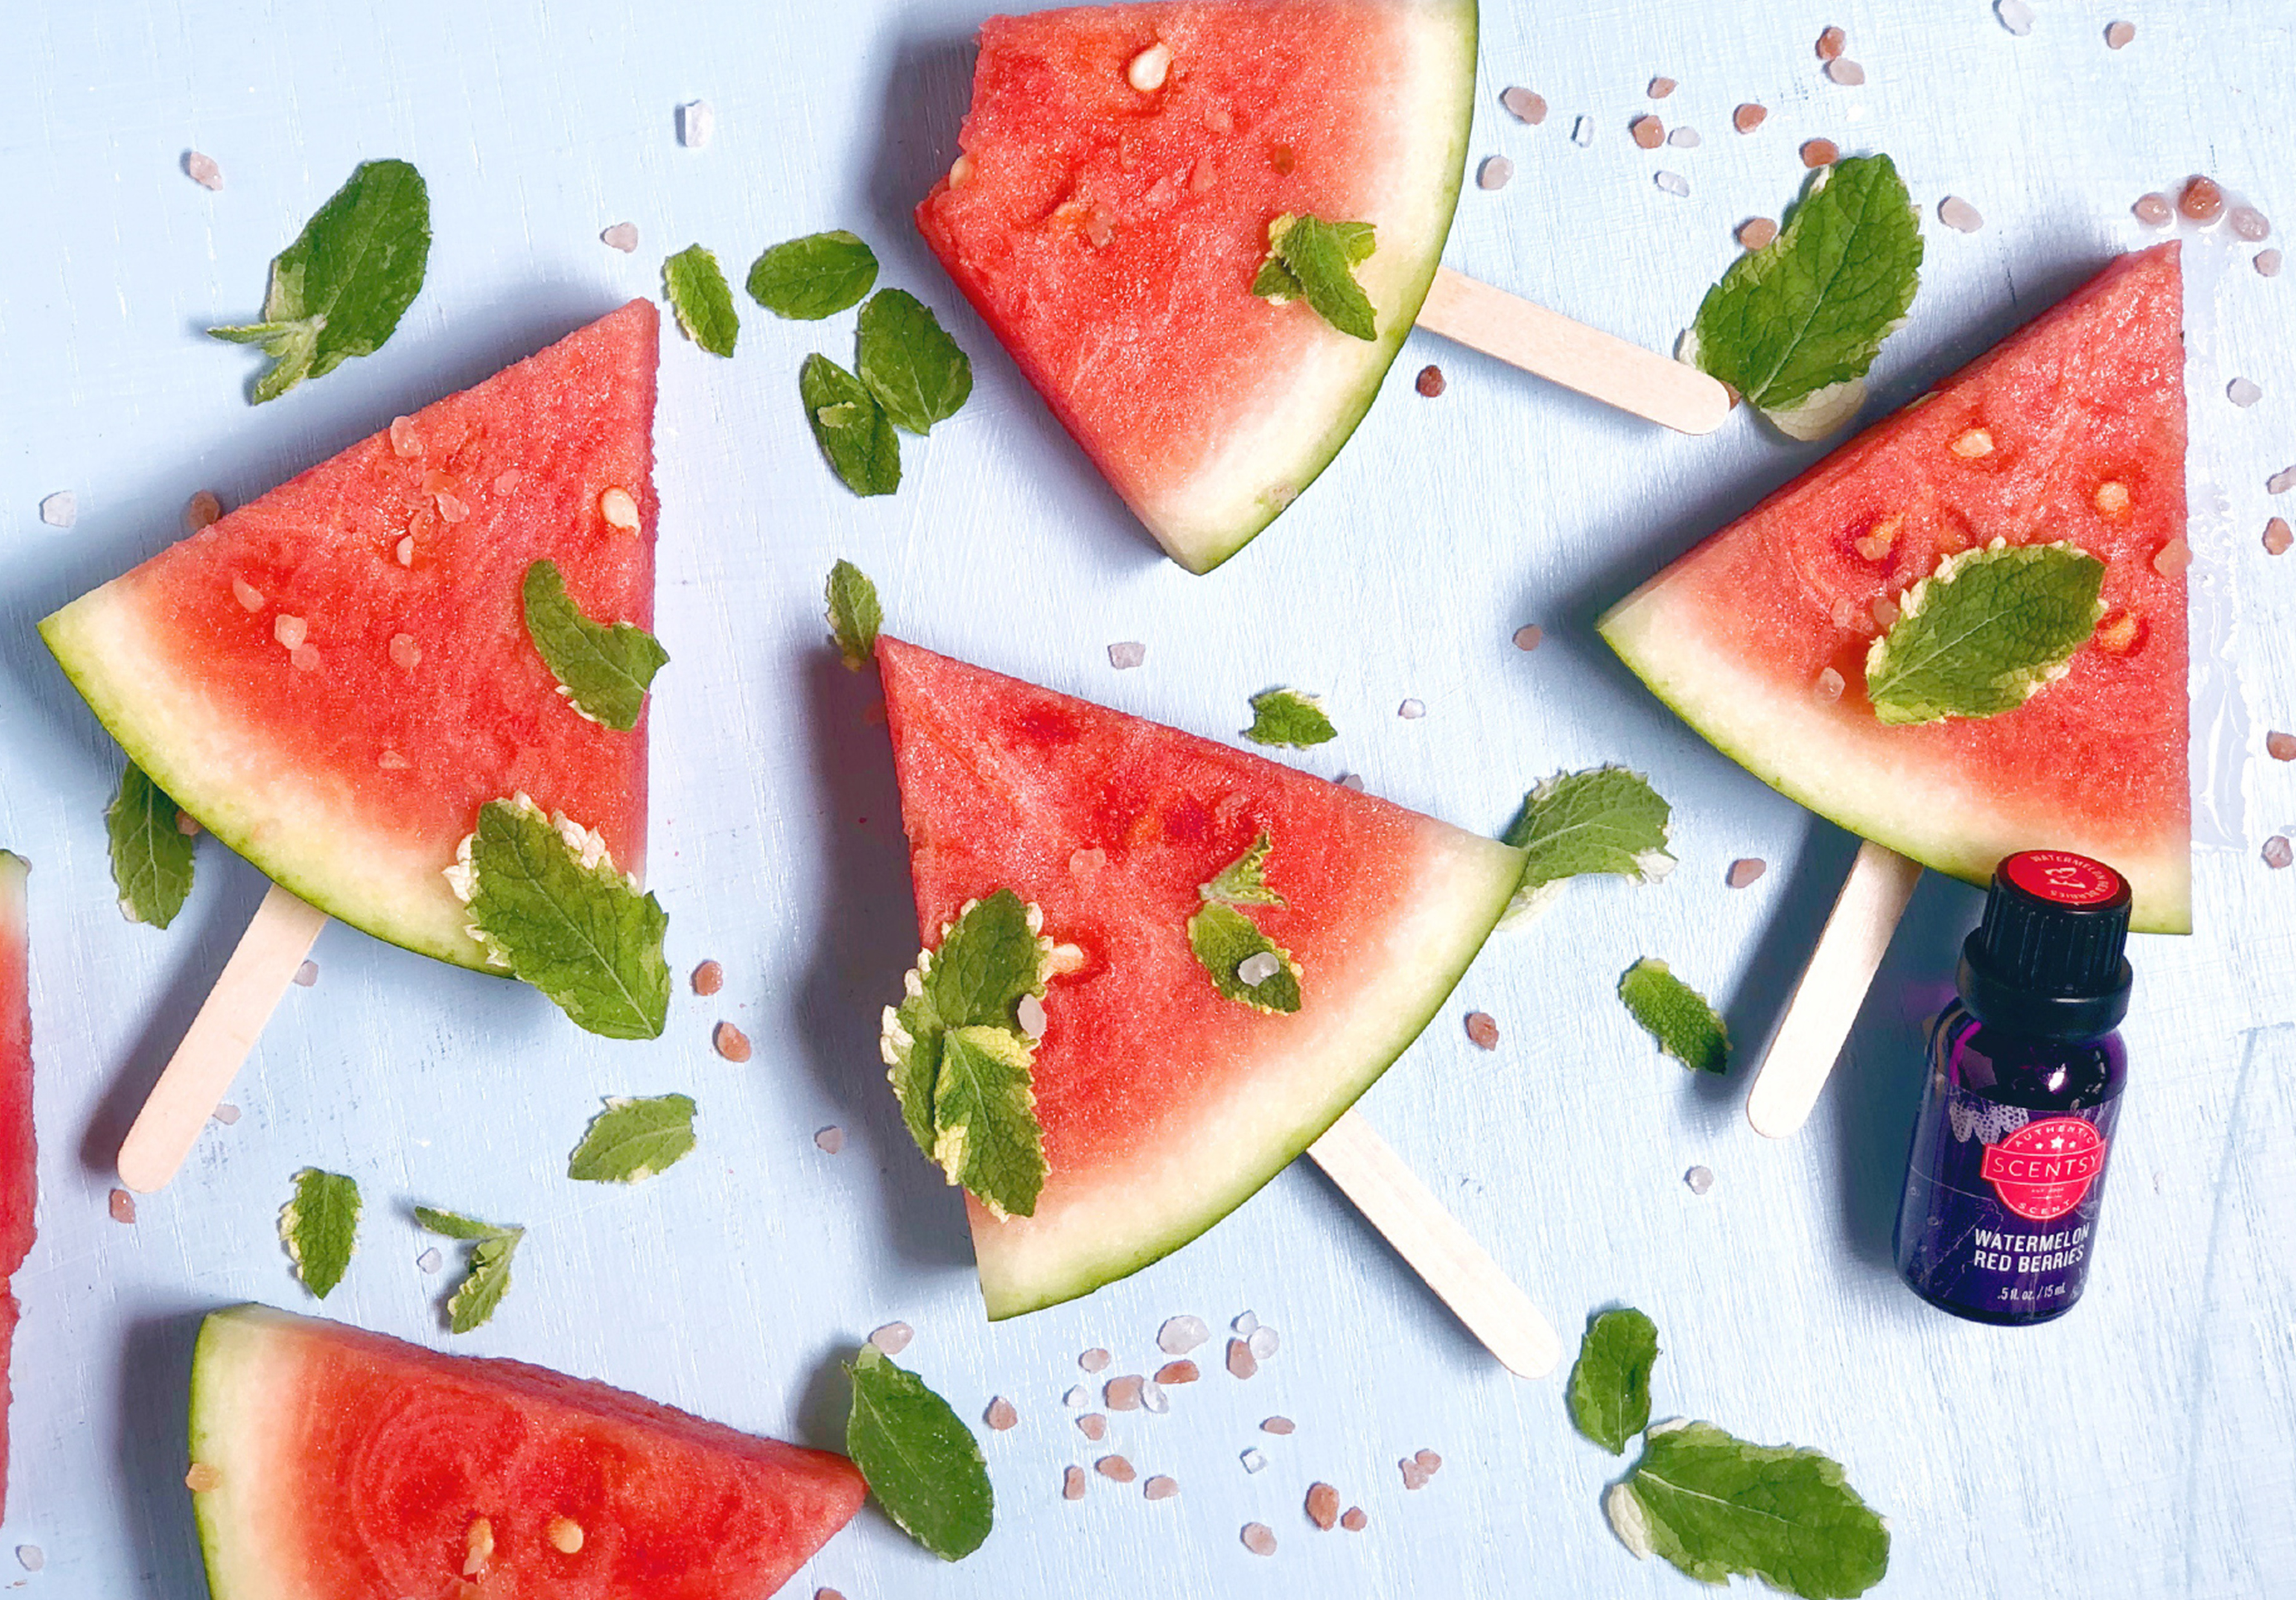 Make National Watermelon Day a sweet celebration